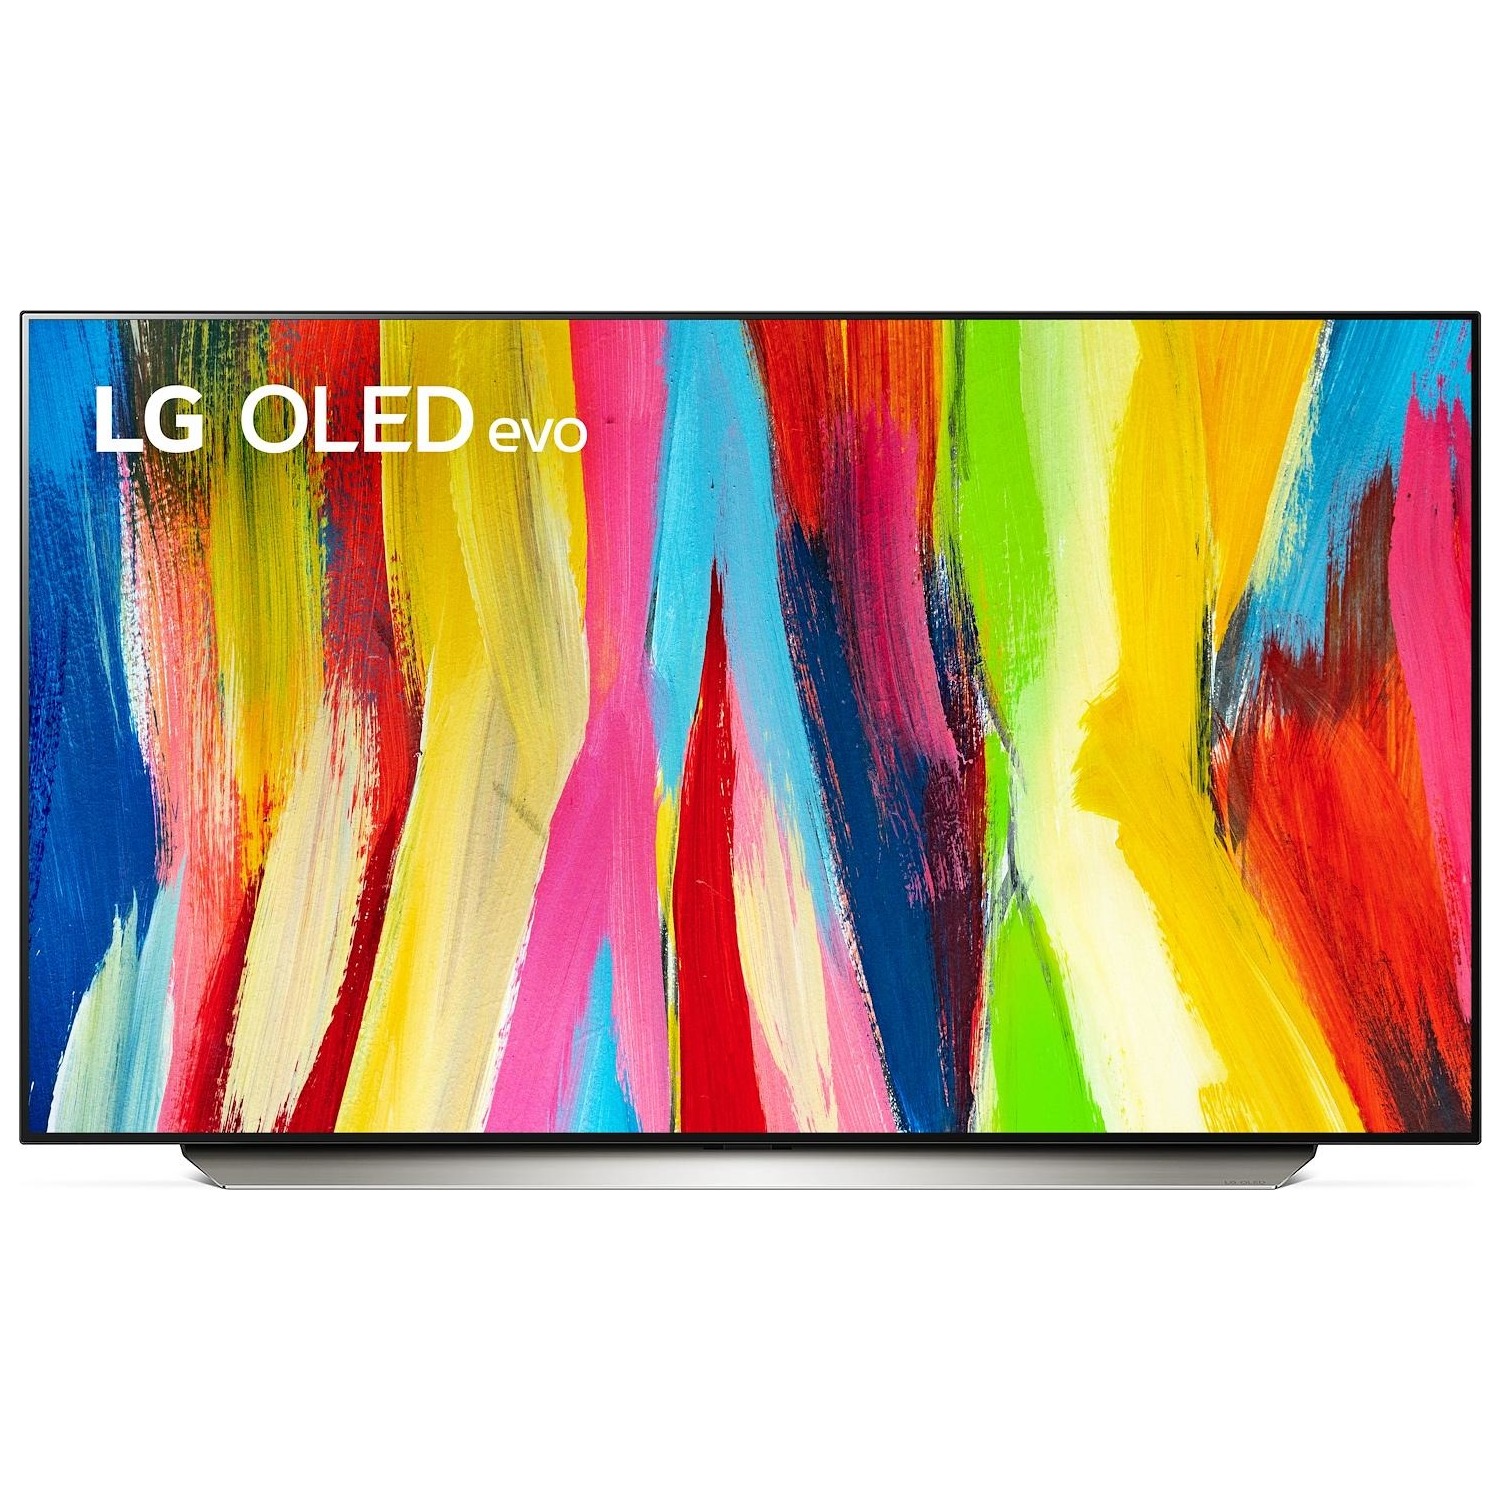 Immagine per TV OLED UHD 4K Smart LG OLED48C26 da DIMOStore